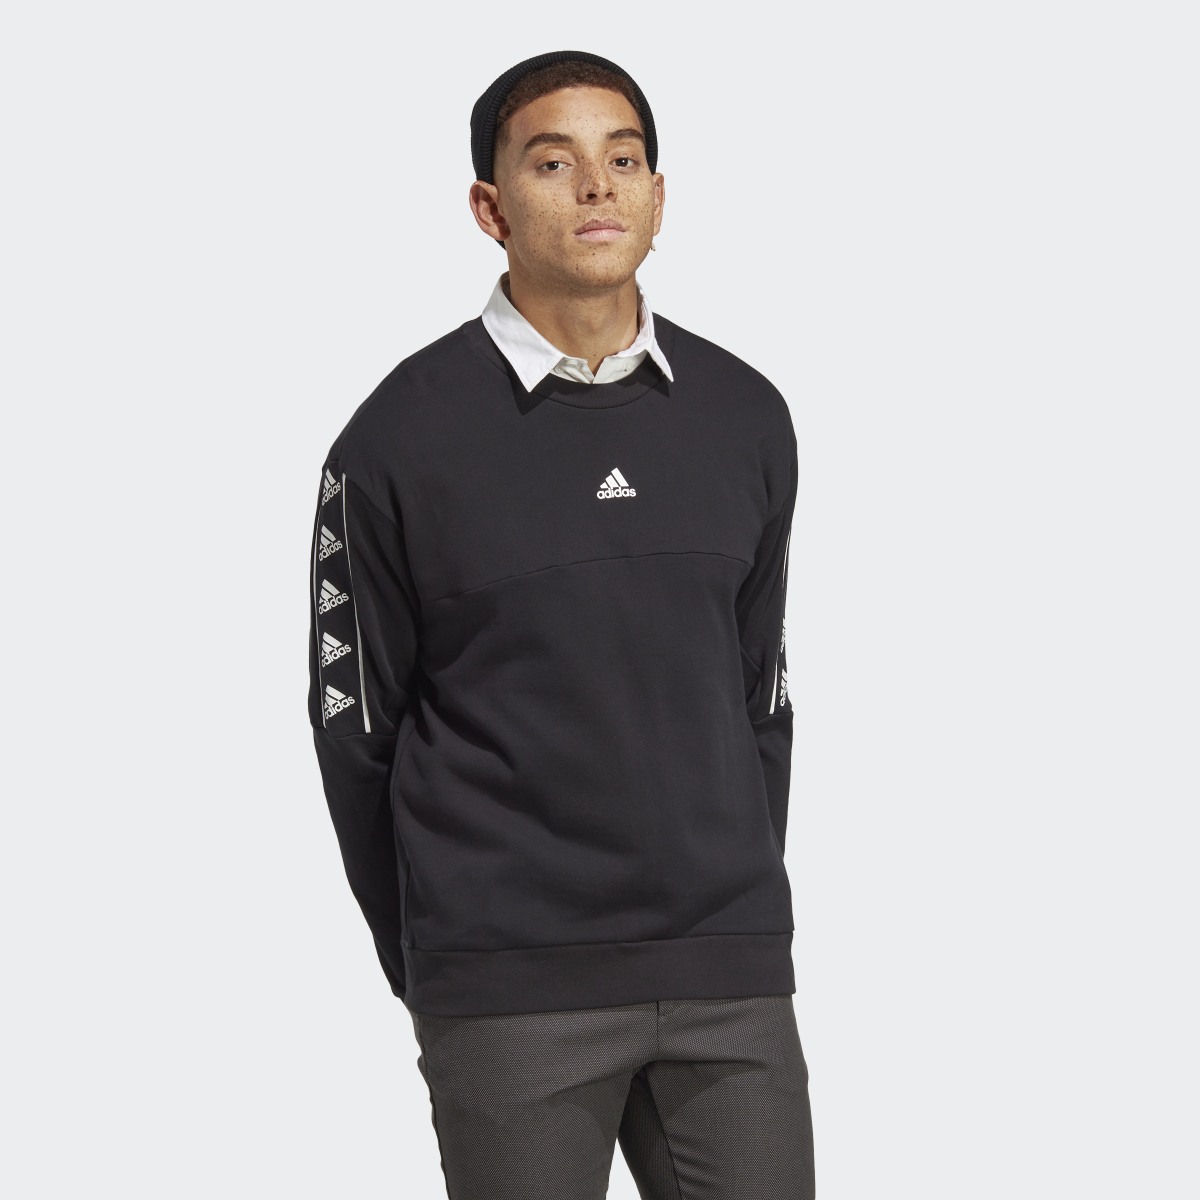 Adidas Brand Love Sweatshirt. 4